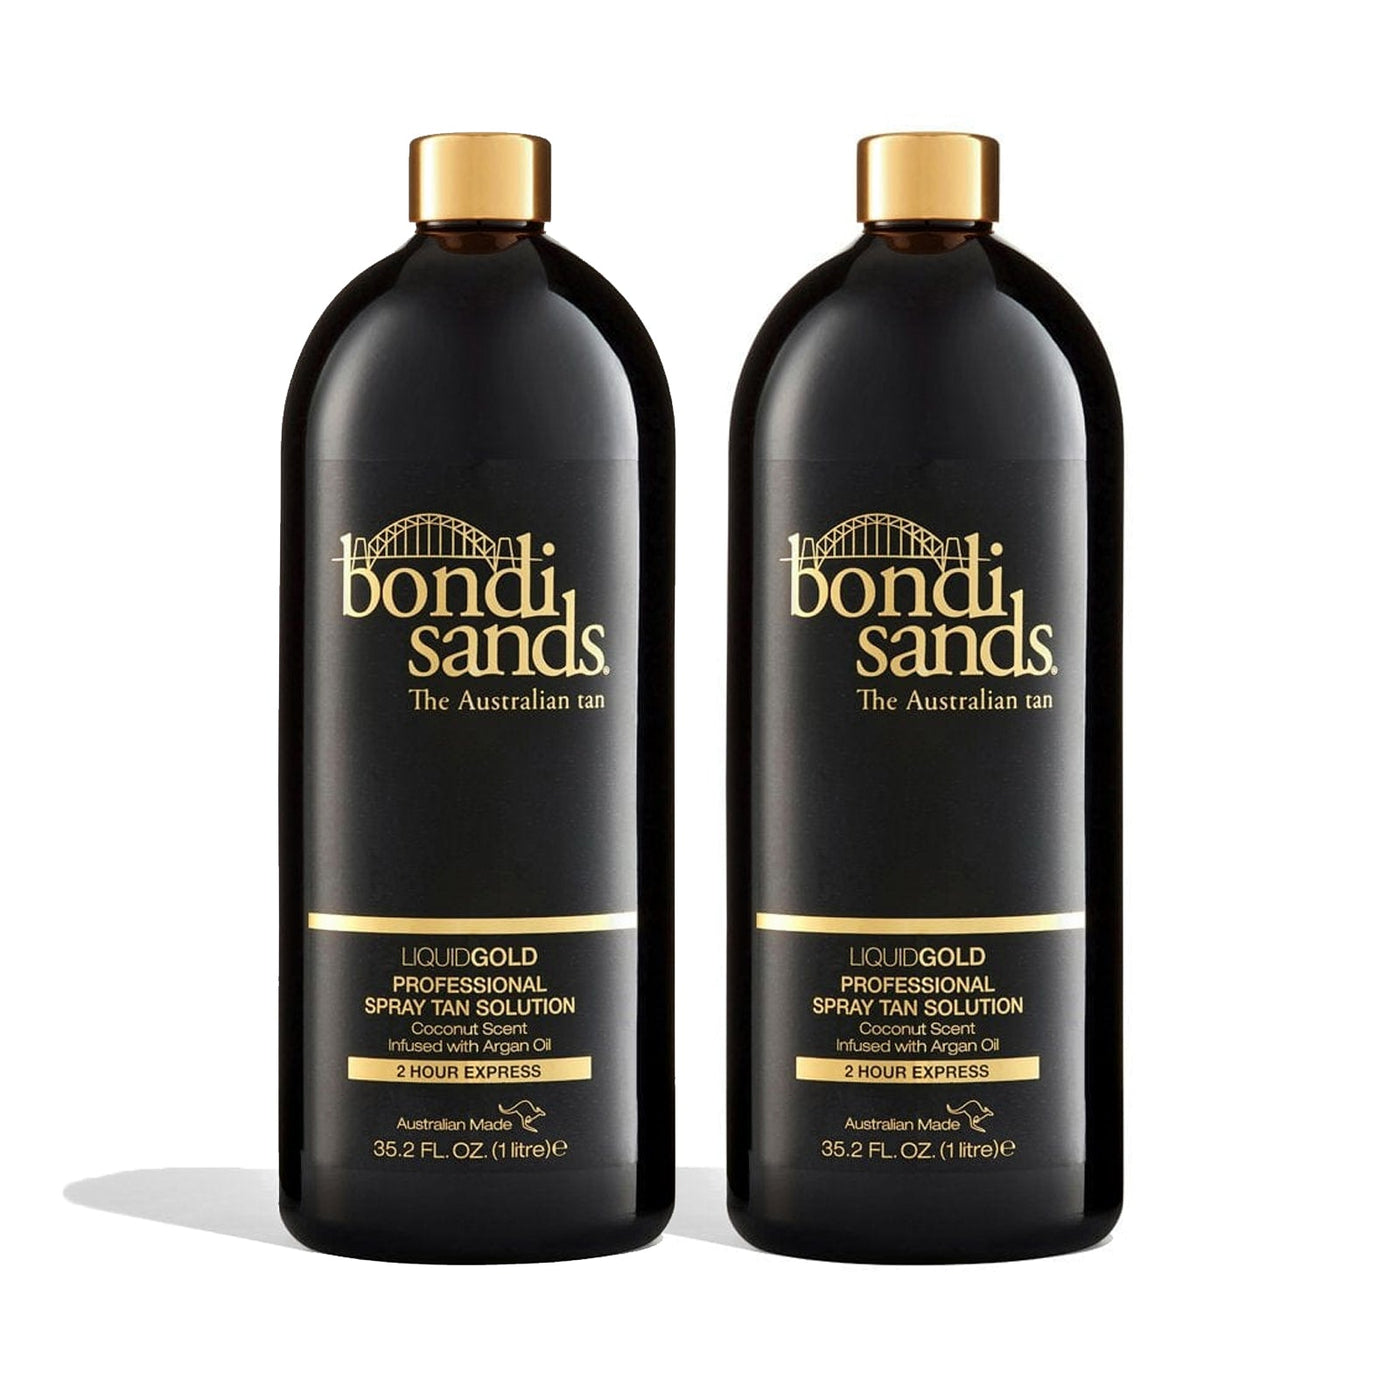 Bondi Sands Professional Tanning Solution Liquid Gold Duo Pack (1 Litre)